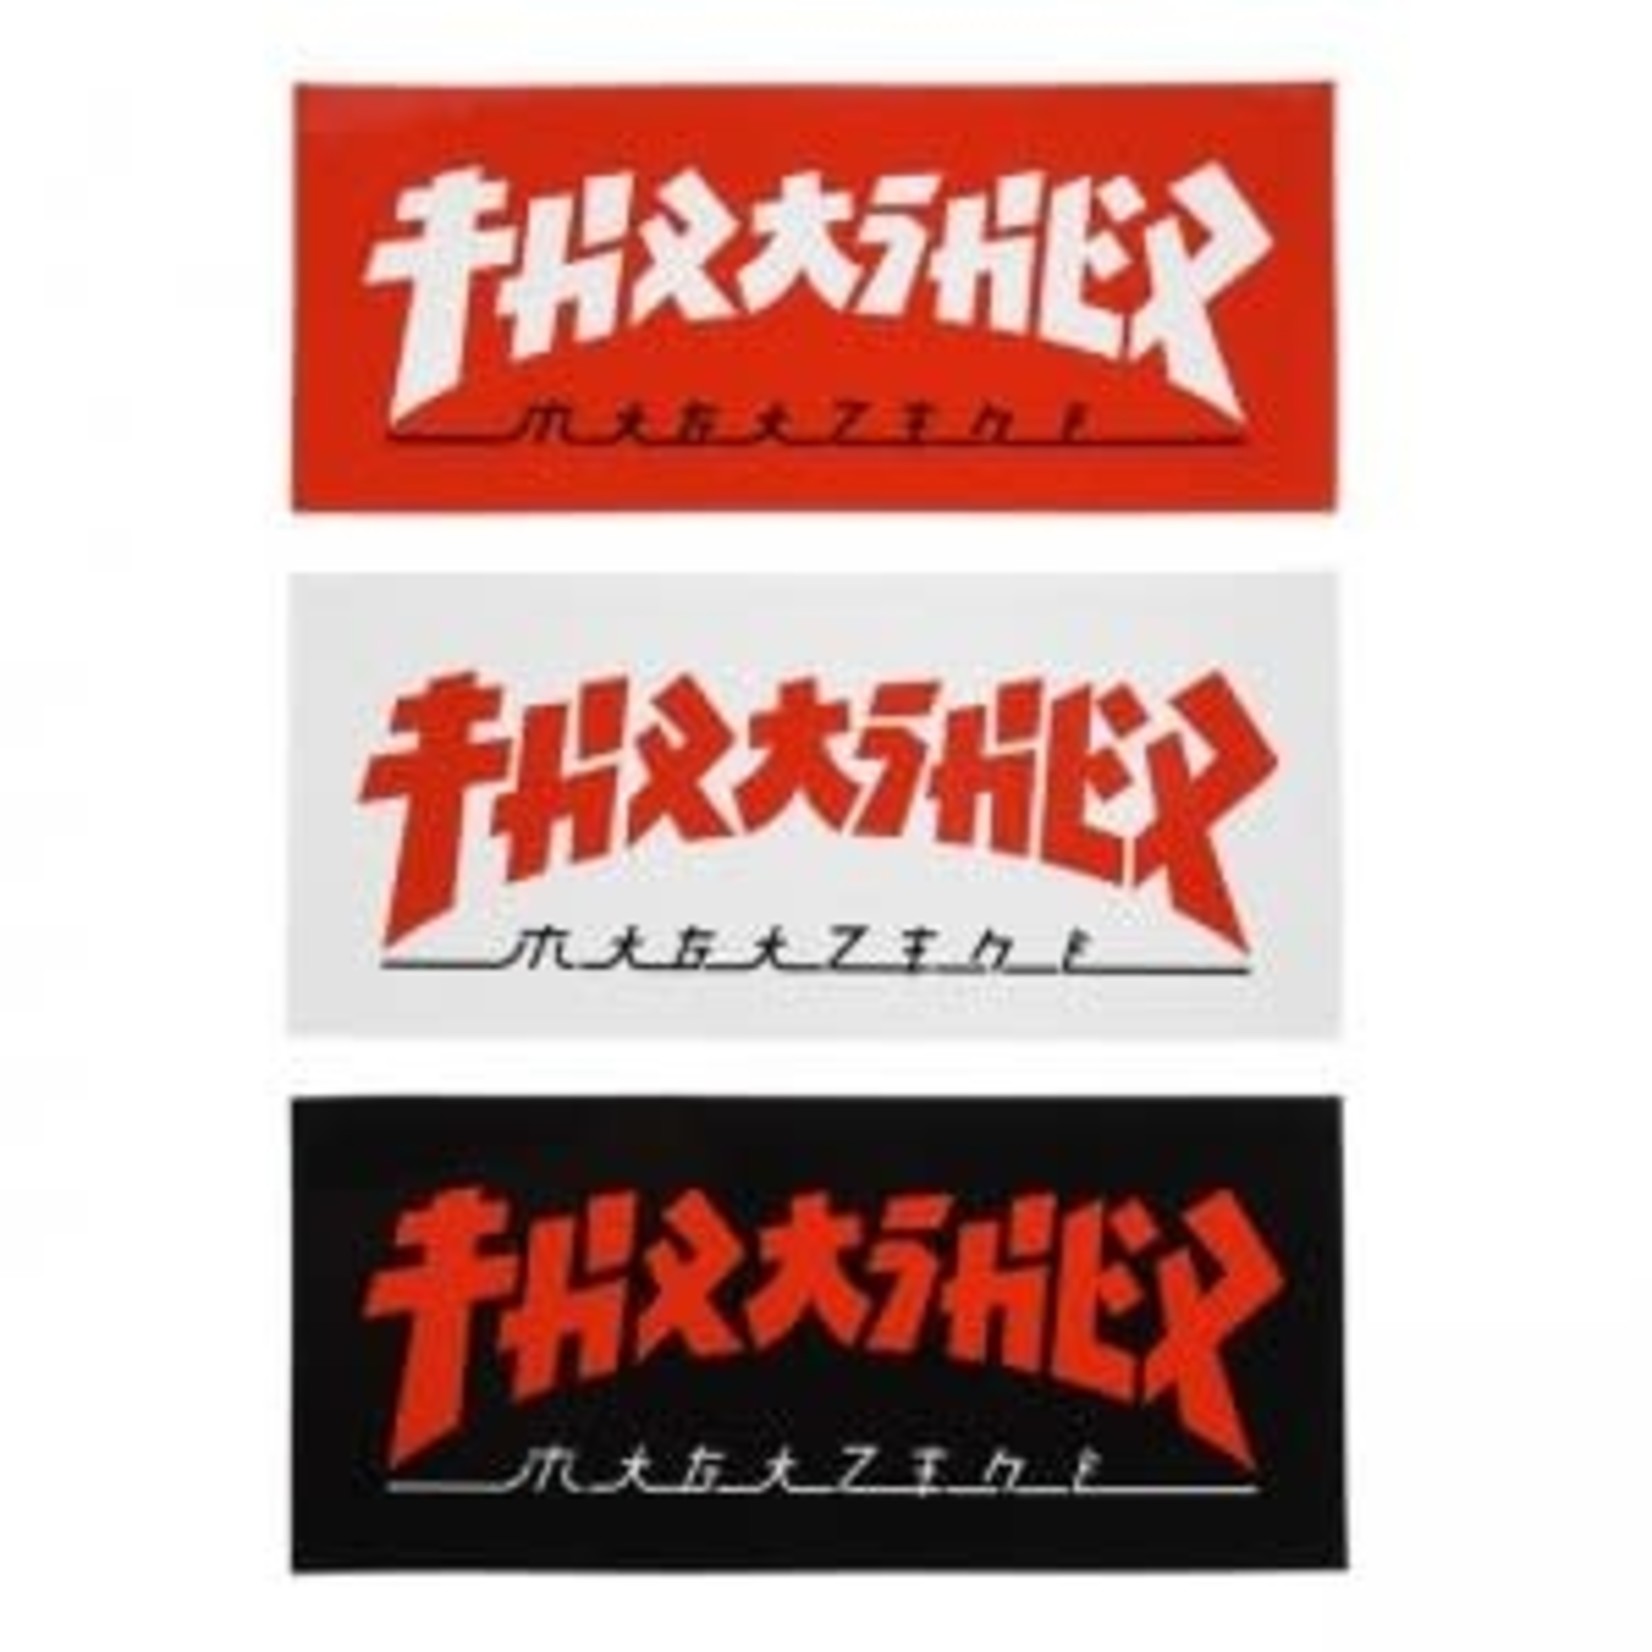 Thrasher Thrasher Godzilla Sticker 6" Rectangular - Asst'd